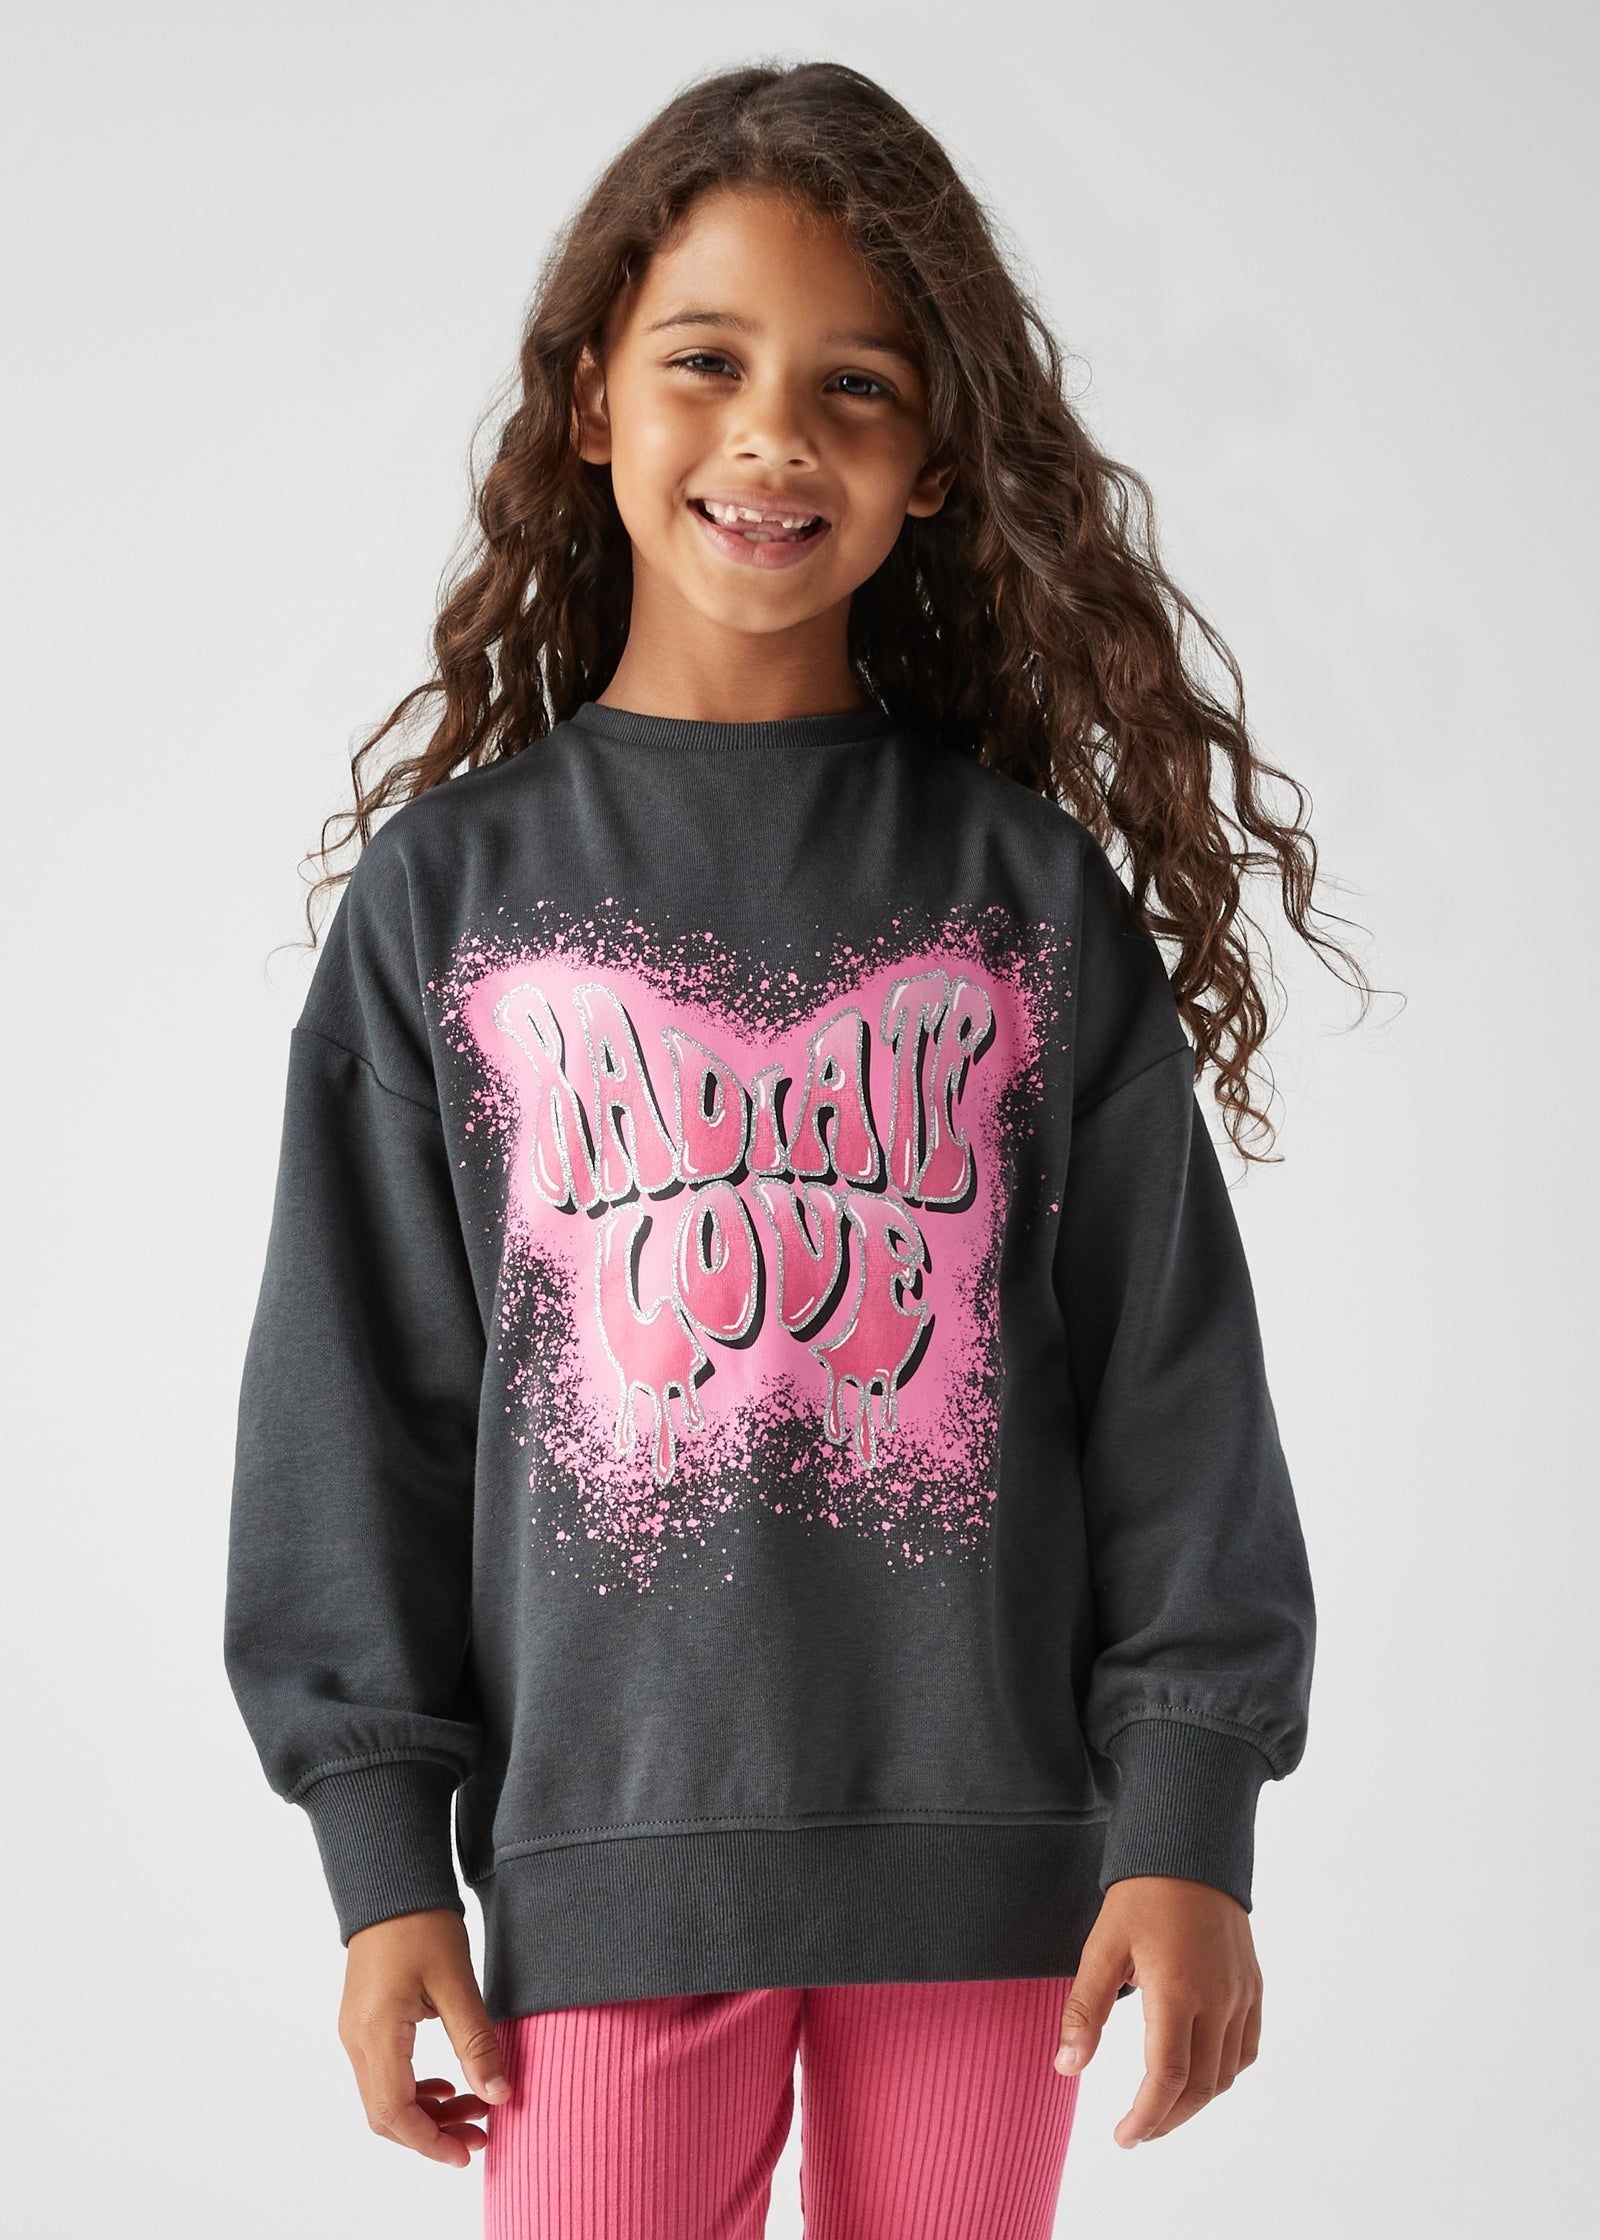 Buy Girls Hoodies & Sweatshirts at Lowest Price from Matalan Oman